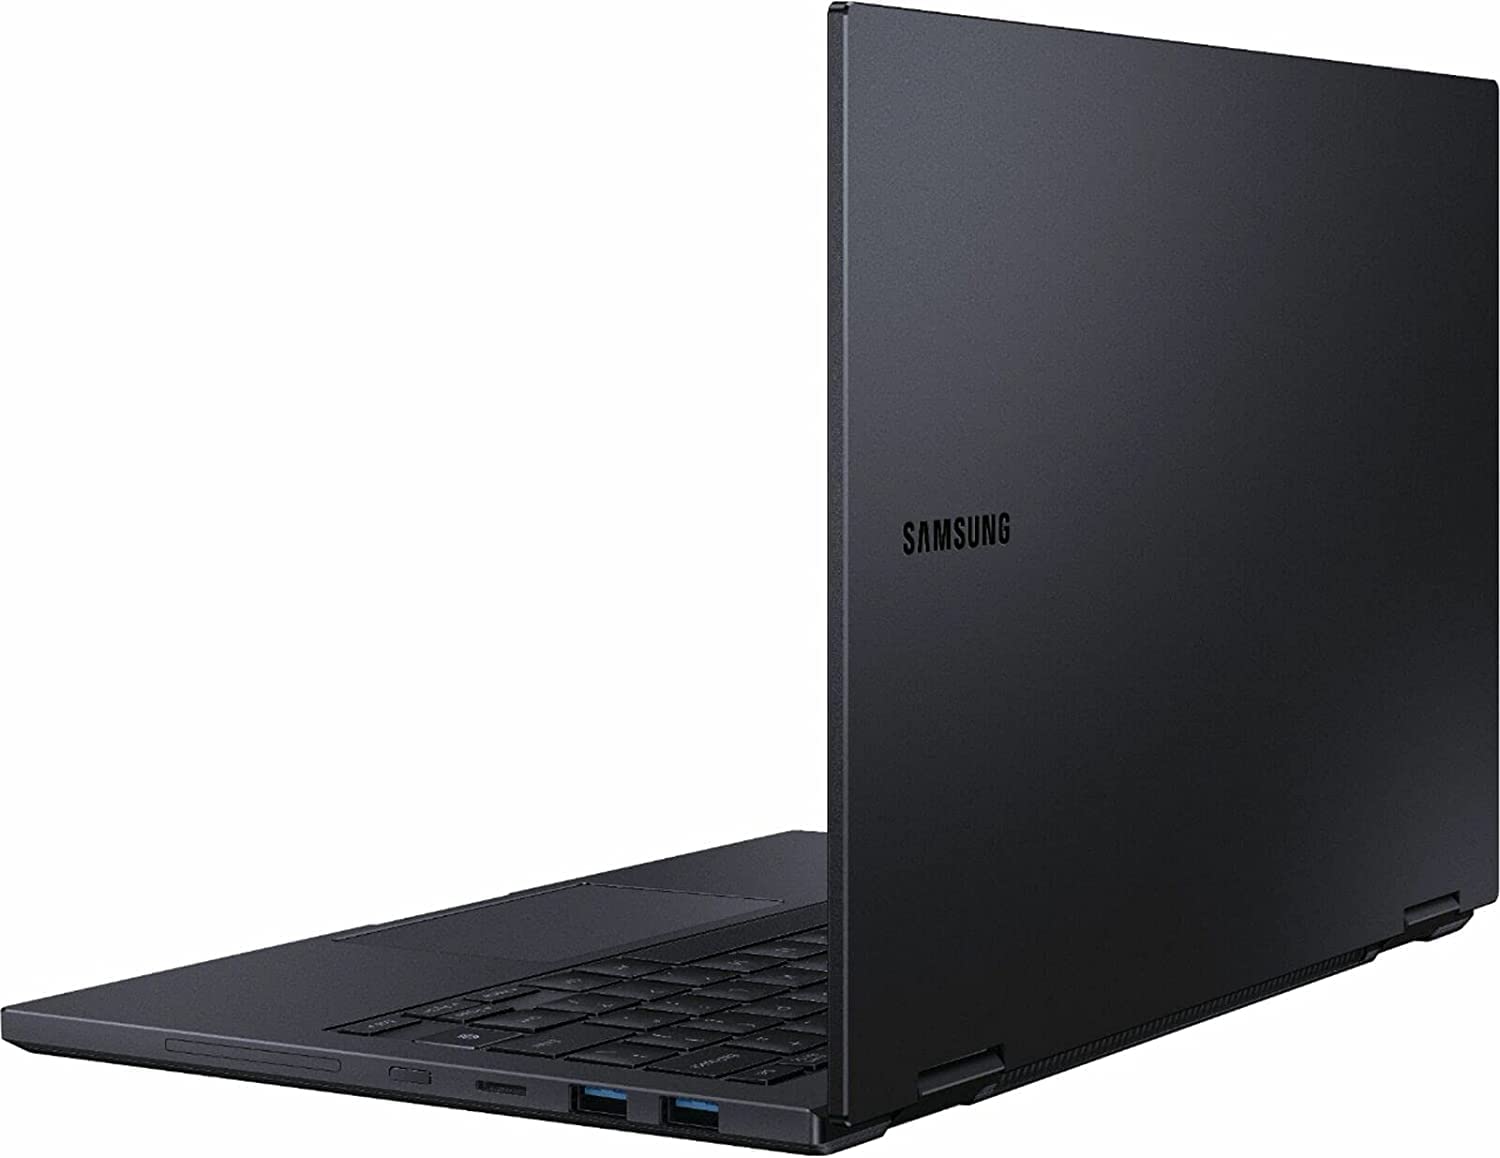 Samsung - Galaxy Book np730qda Flex2 Alpha 13.3" QLED Touch-Screen Laptop - Intel Core i7-1165G7 - 16GB Memory - 512GB SSD - mystic blue - Renewed